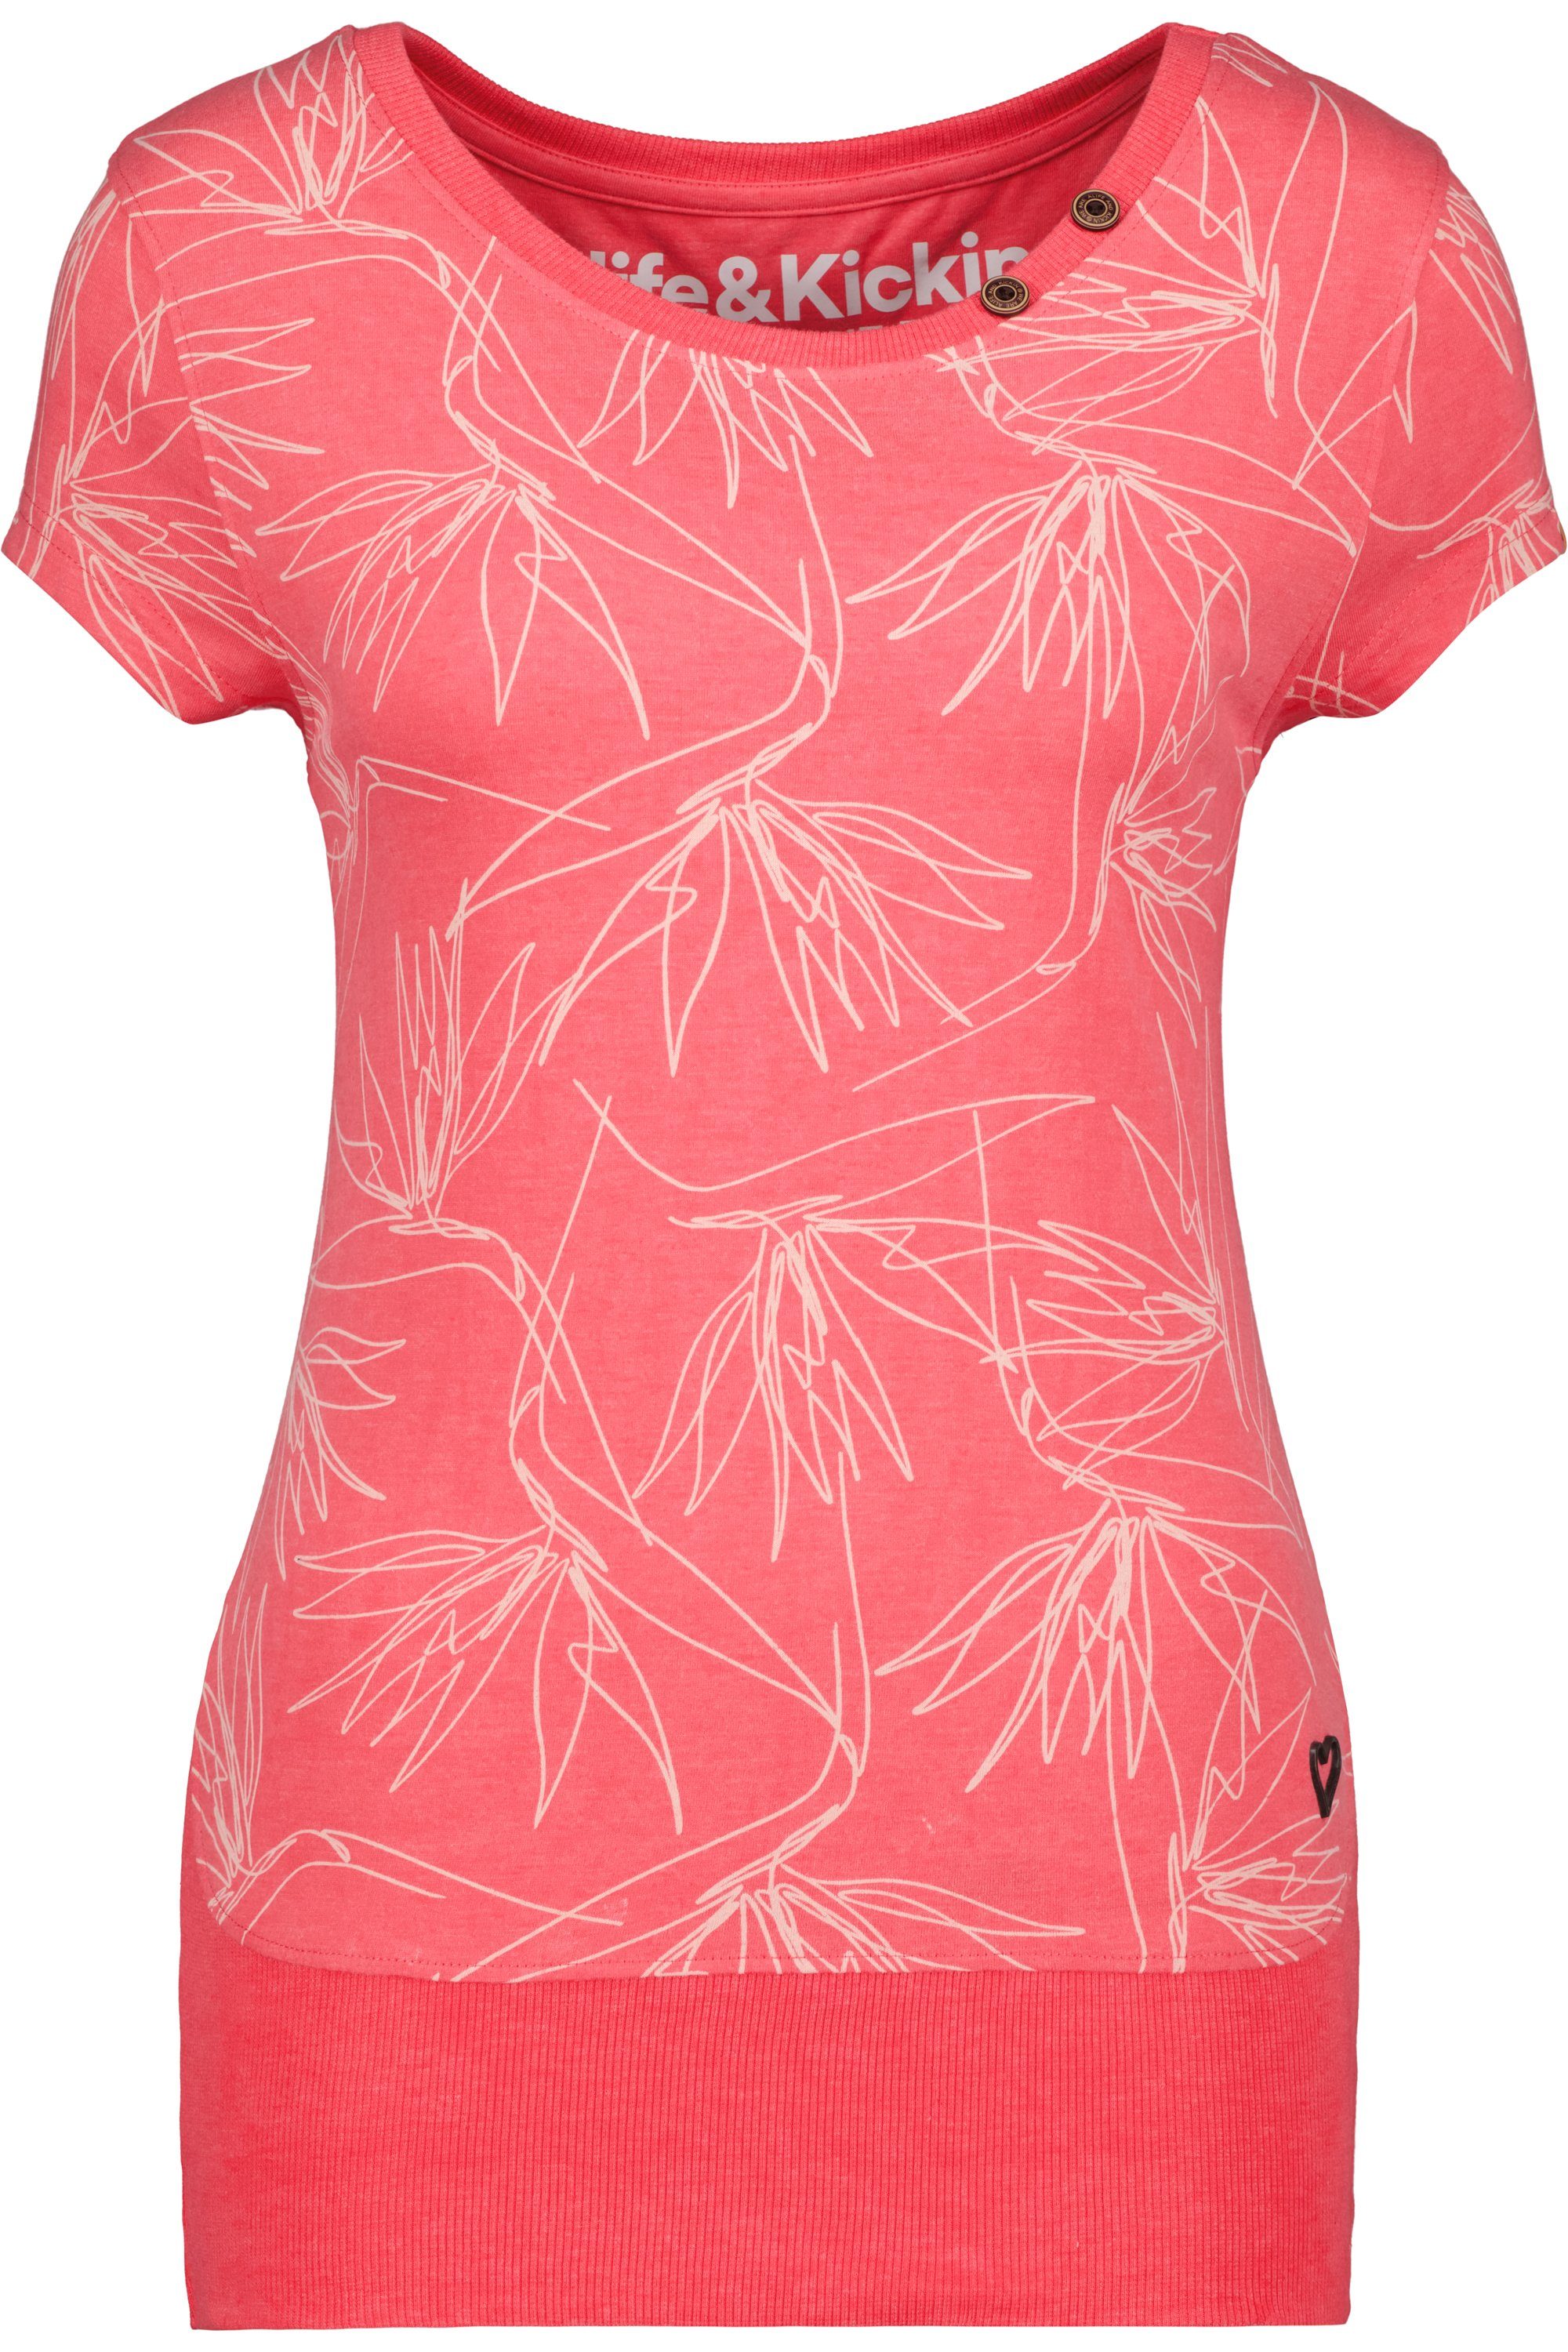 Shirt Alife Damen B melange & Kickin coral Kurzarmshirt, Rundhalsshirt CocoAK Shirt